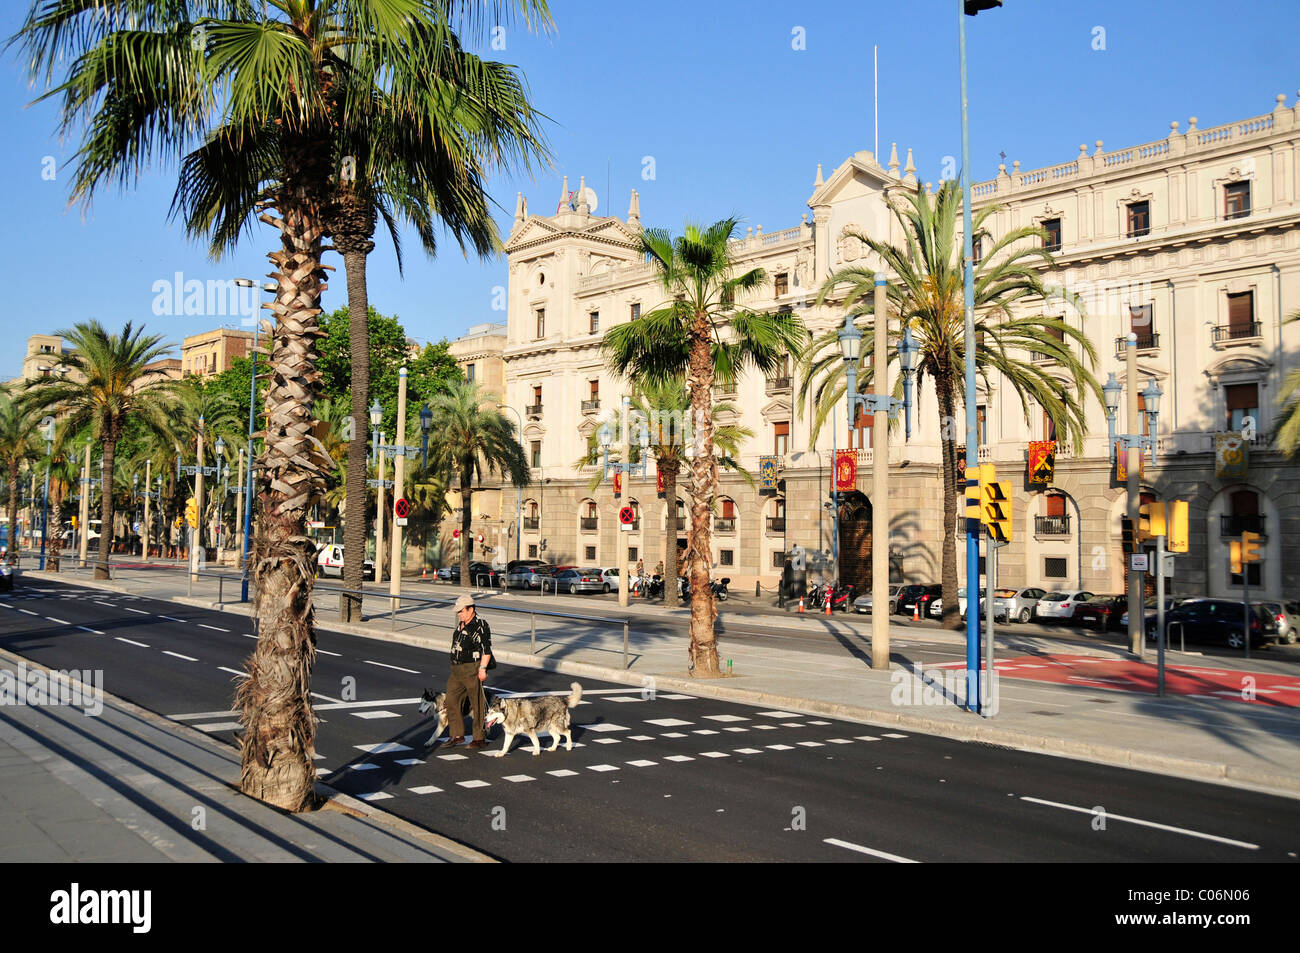 Paseo de Colón, an elegant promenade for strolling at the Old Port, Barcelona, Spain, Iberian Peninsula, Europe Stock Photo